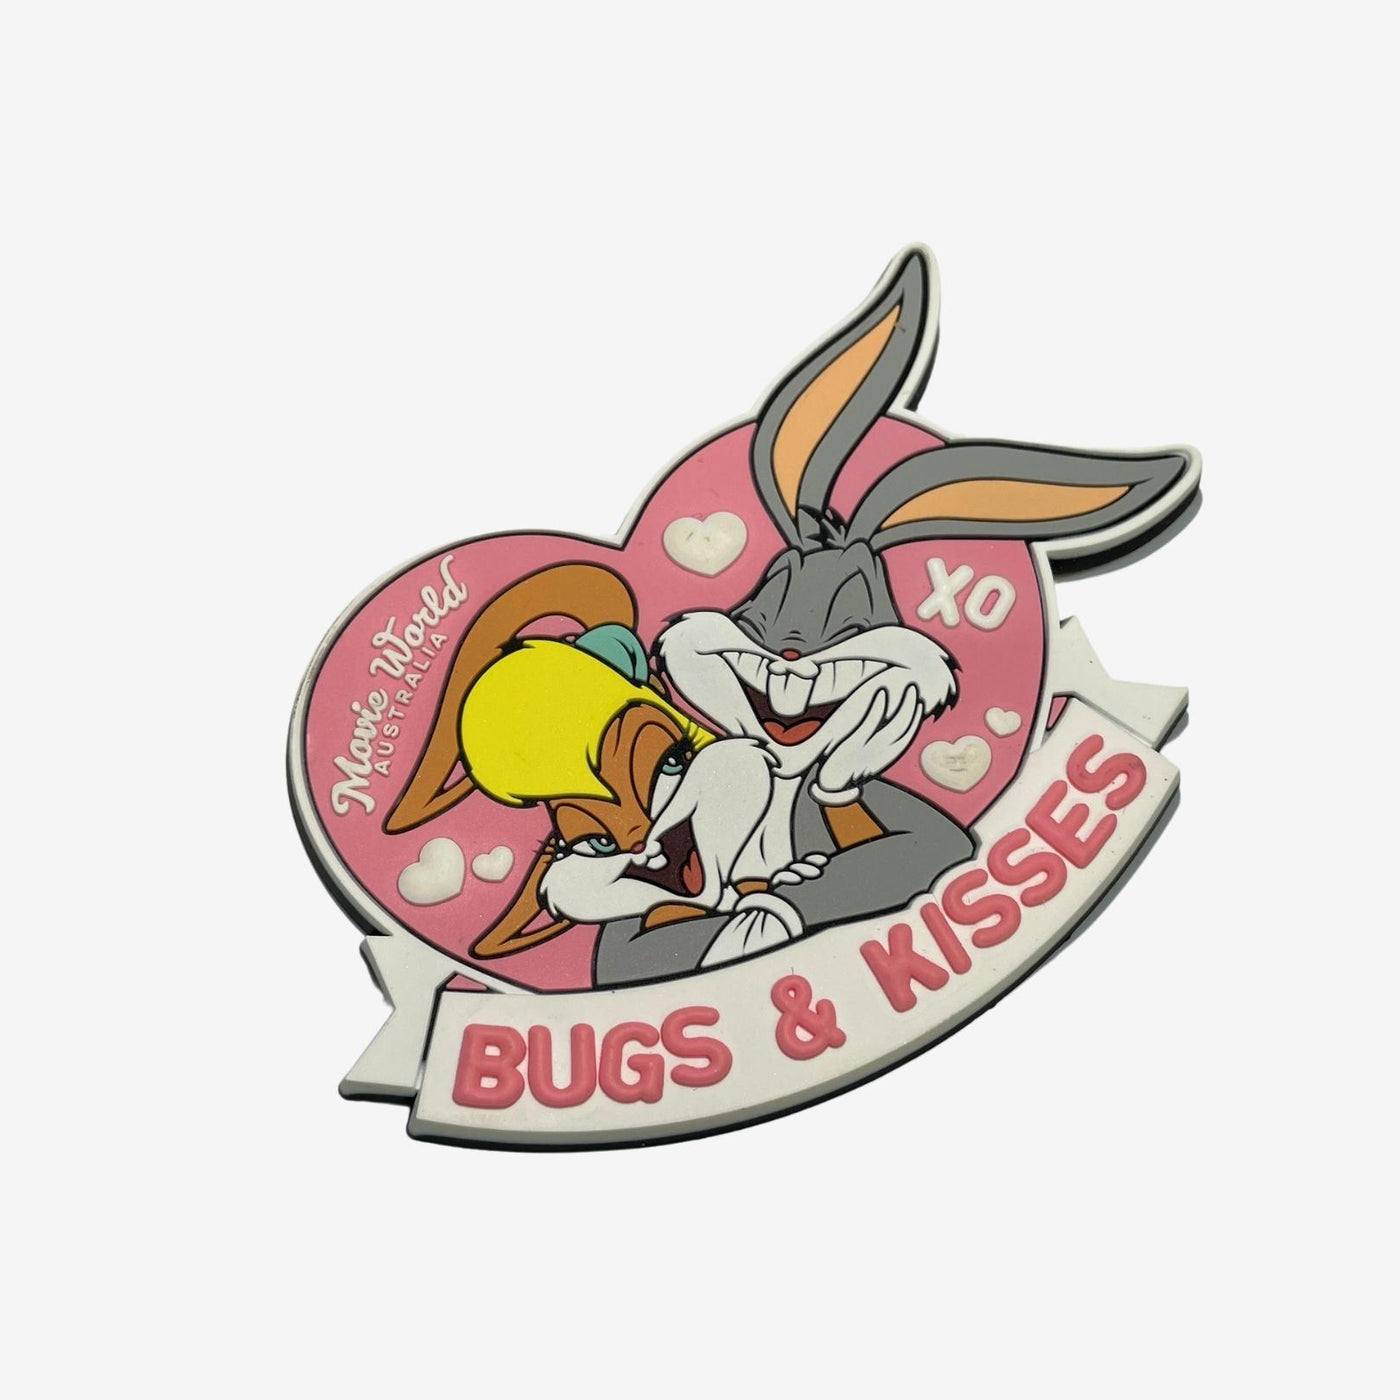 Bugs Bunny & Lola "Bugs & Kisses" Magnet